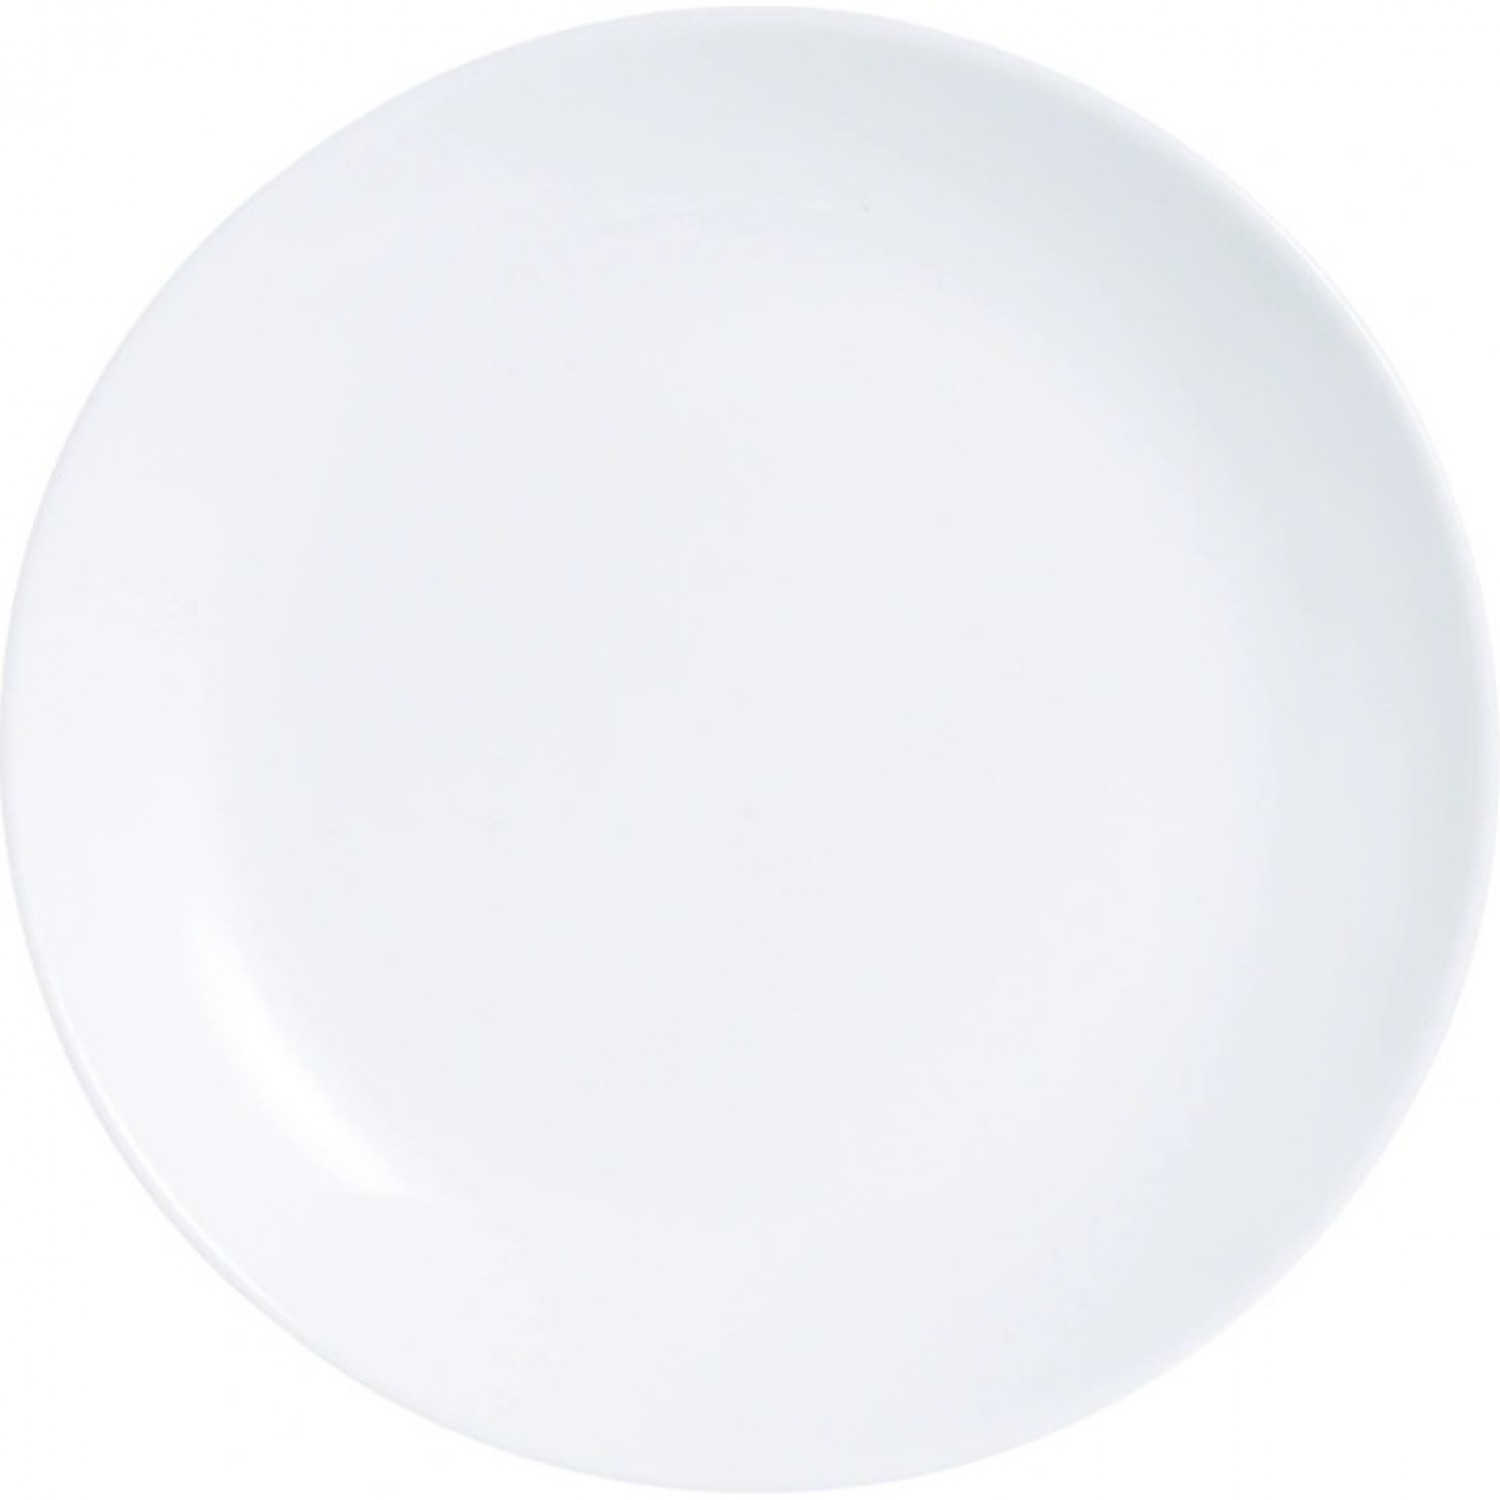 Тарелка обеденная ДИВАЛИ 25см LUMINARC D6905 (P3299) тарелка обеденная luminarc дивали 25см